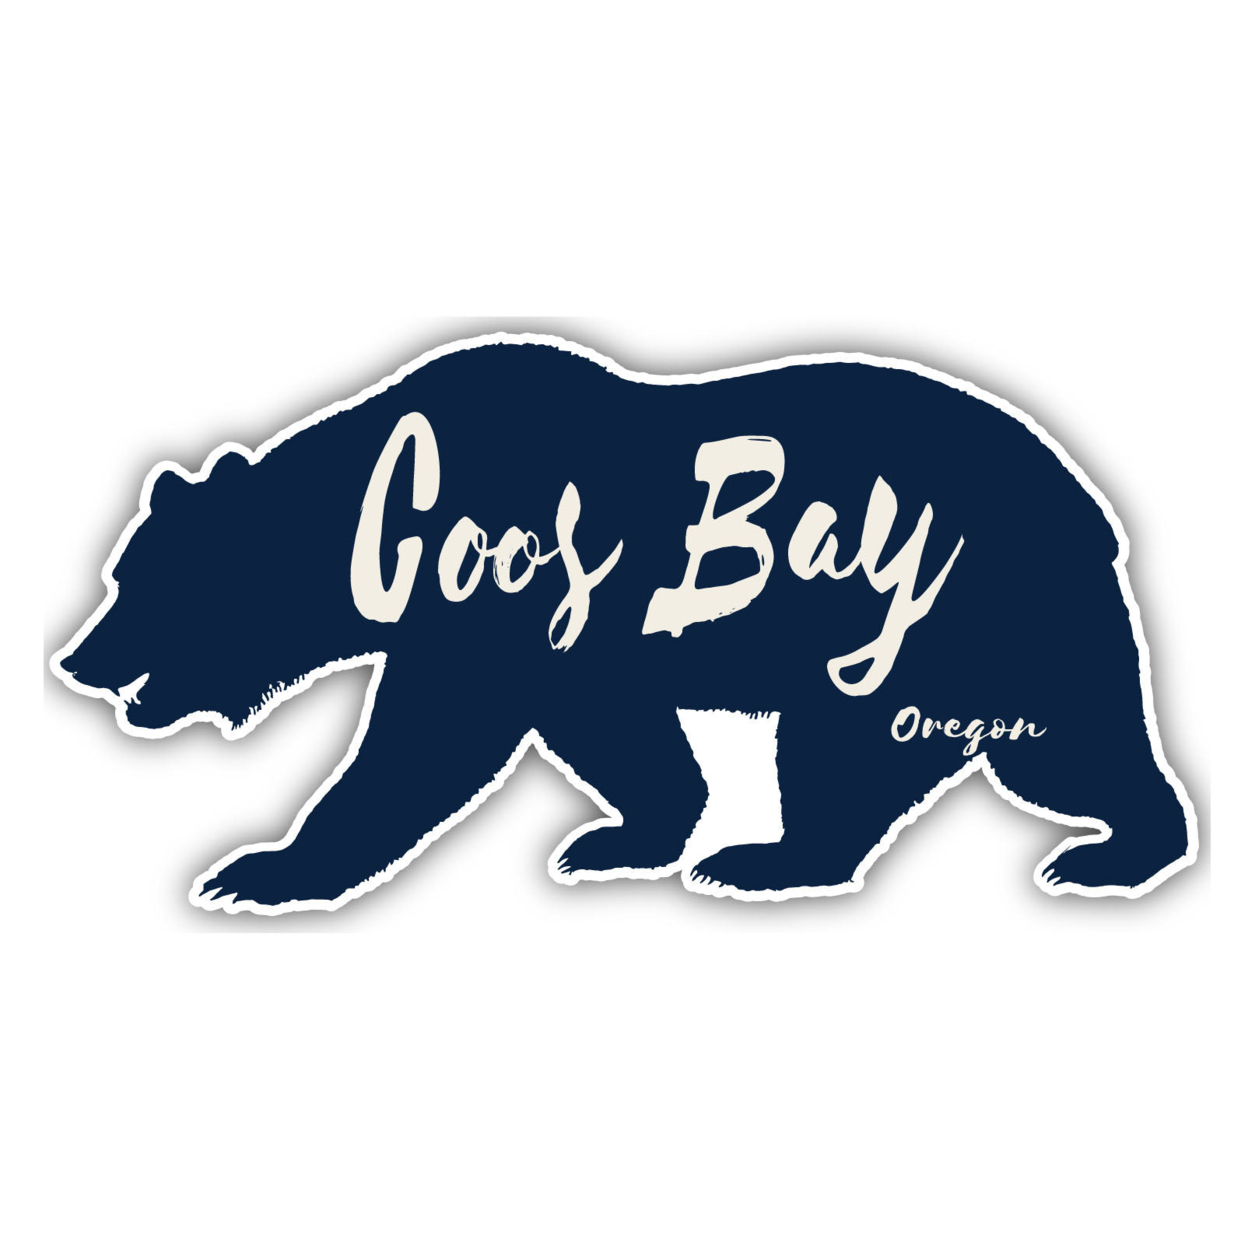 Coos Bay Oregon Souvenir Decorative Stickers (Choose Theme And Size) - Single Unit, 6-Inch, Adventures Awaits